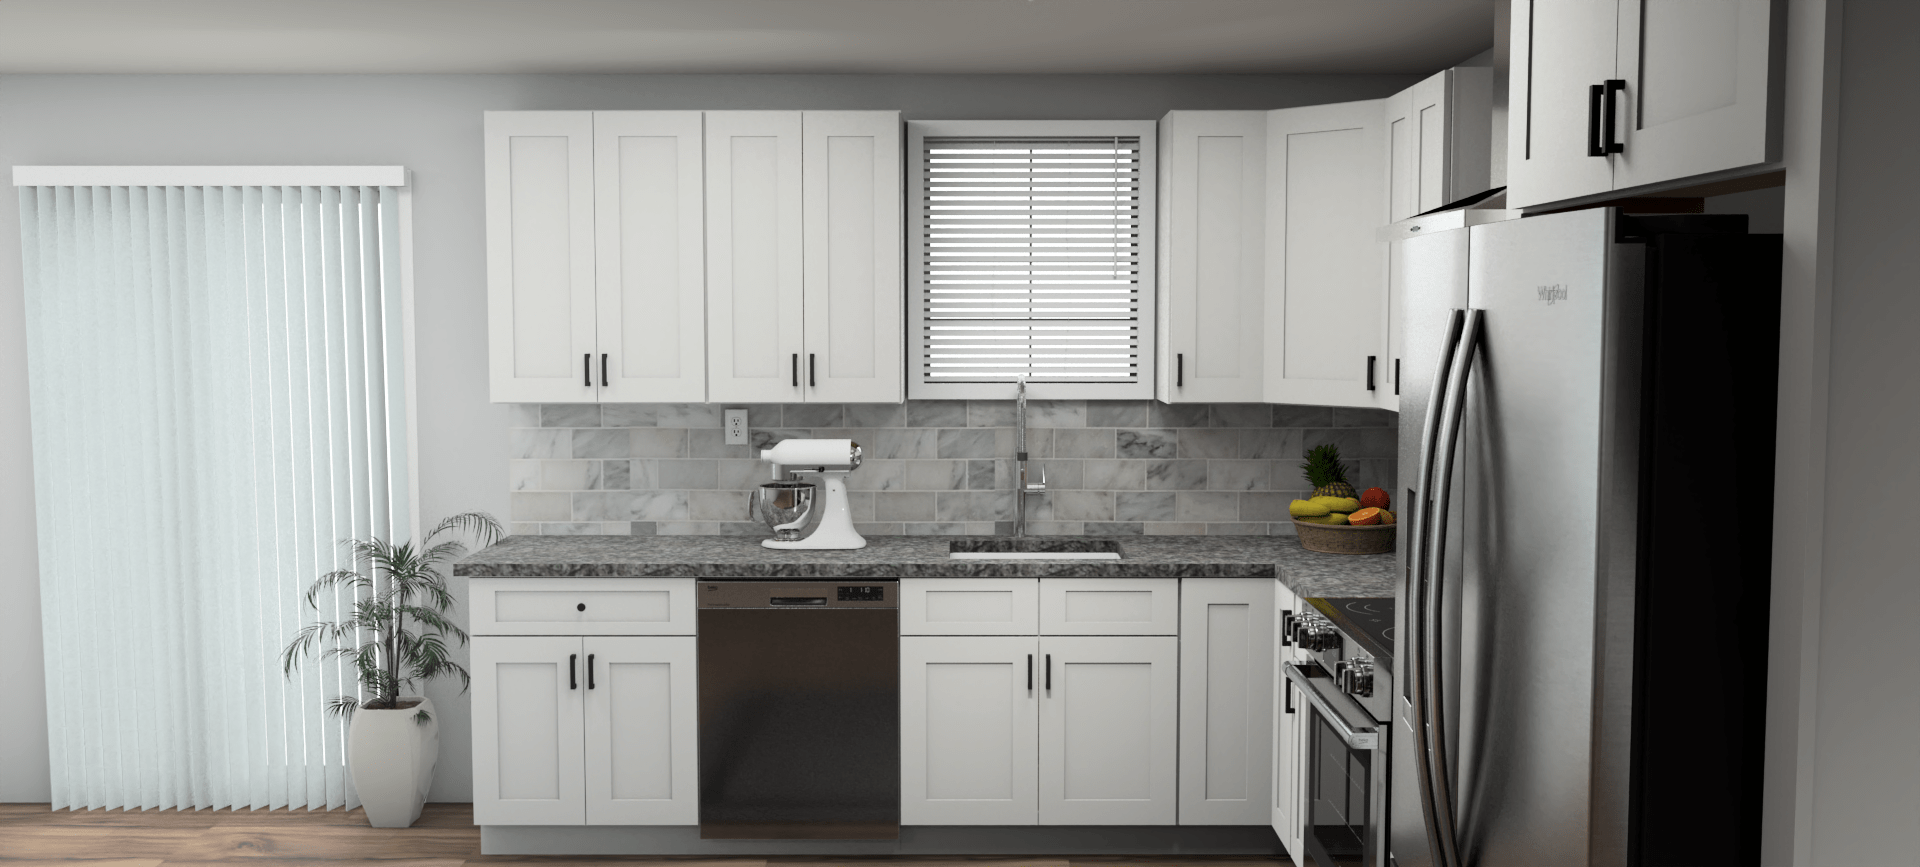 Fabuwood Allure Galaxy Frost 10 x 12 L Shaped Kitchen Side Layout Photo